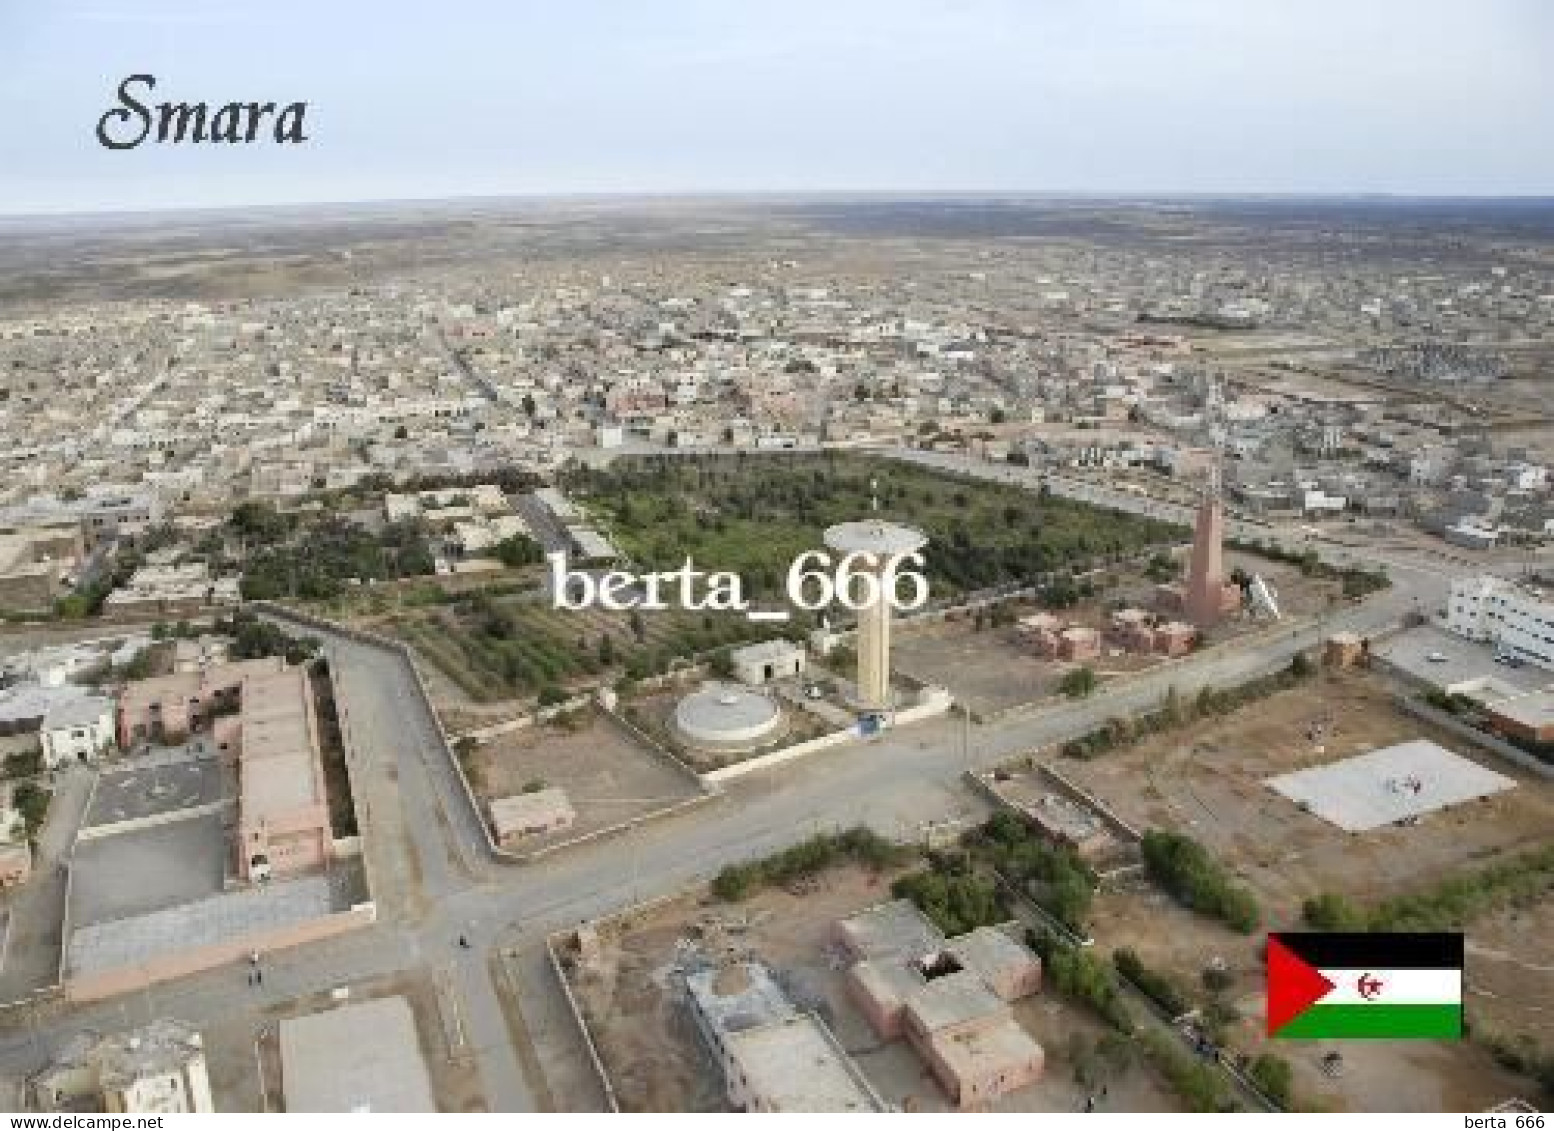 Western Sahara Smara Aerial View New Postcard - Westelijke Sahara